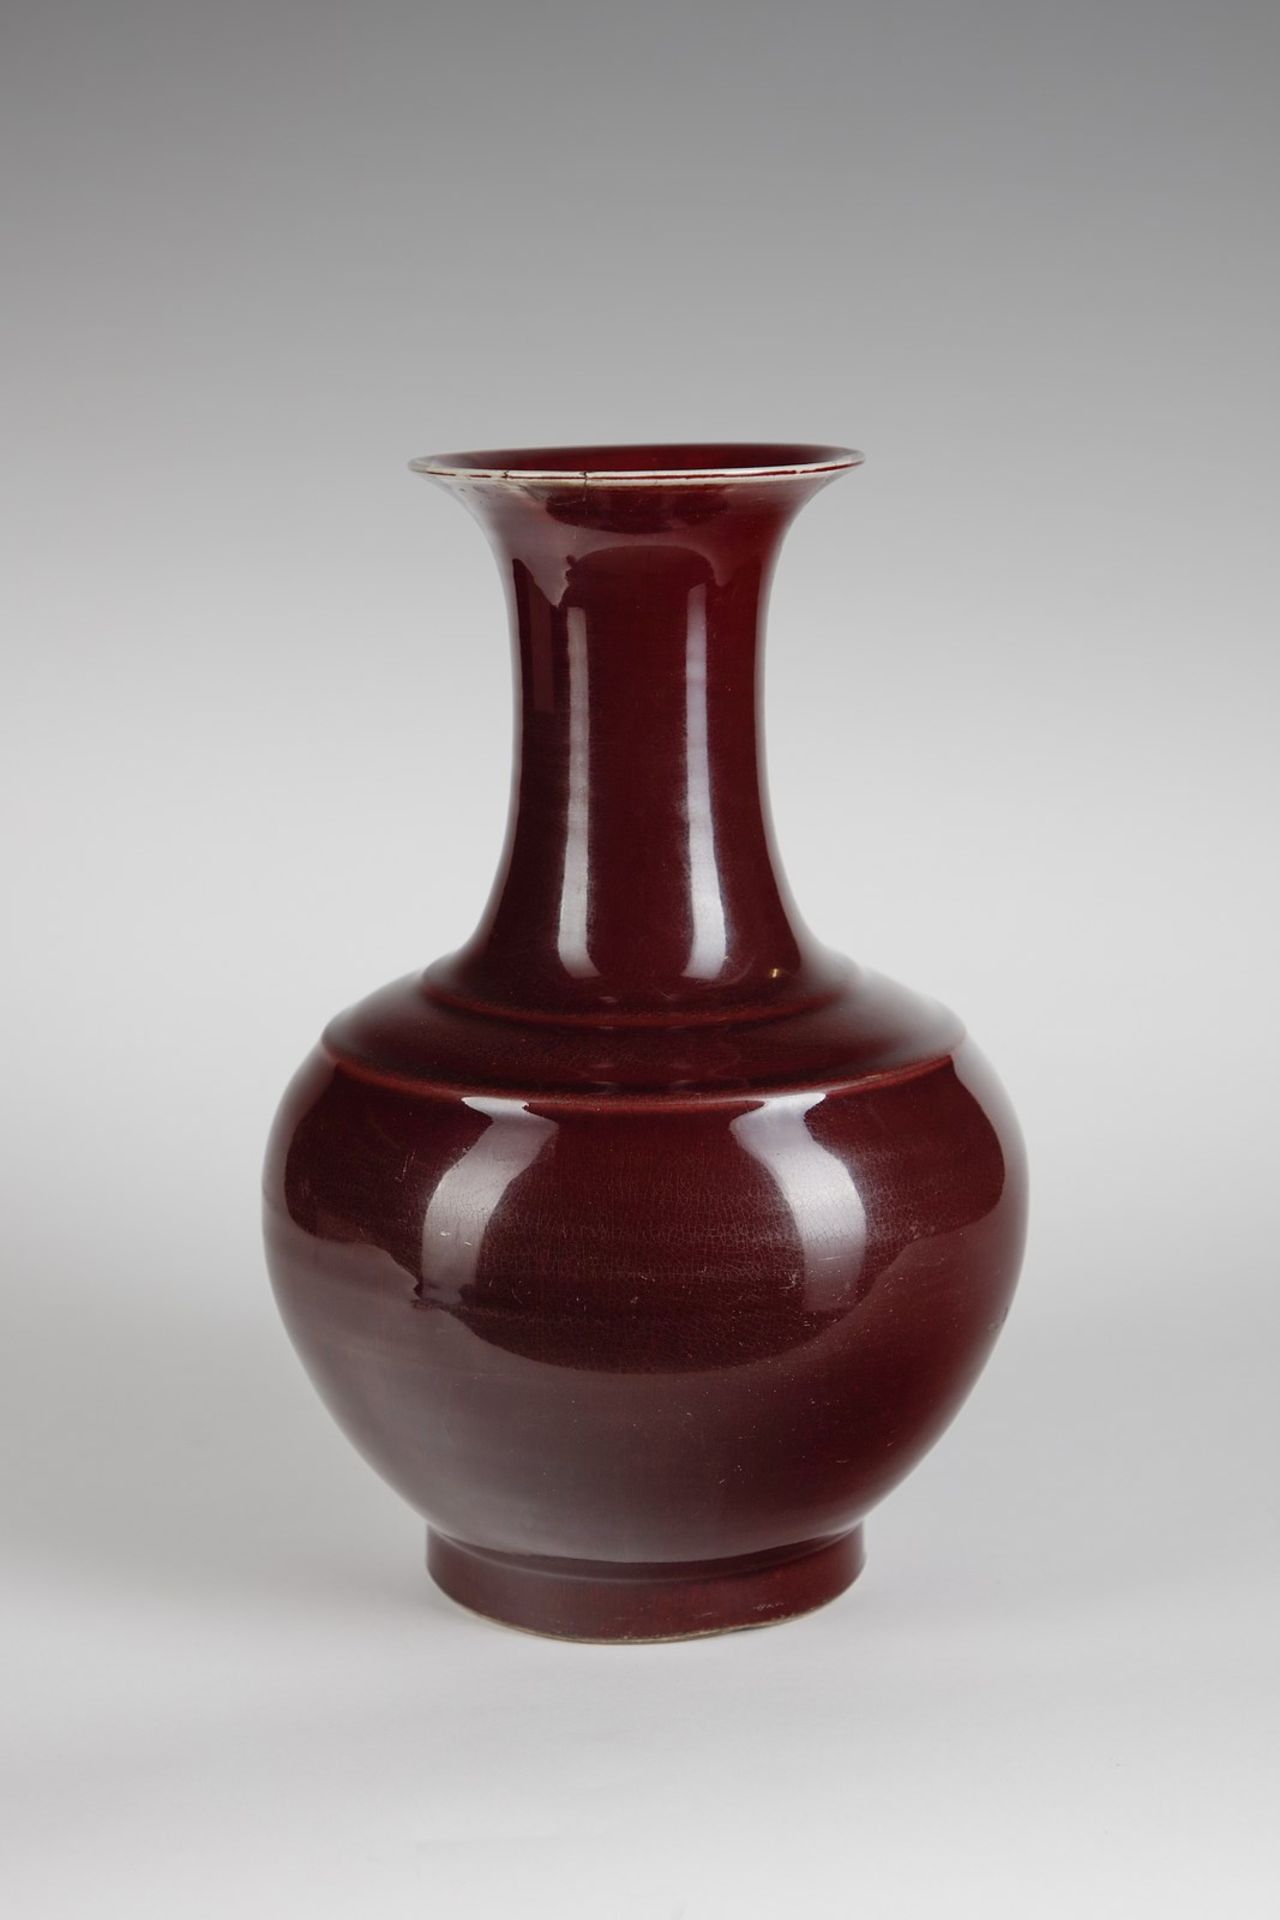 Arte Cinese A sang de boeuf porcelain vase China, Qing dynasty, 19th century .